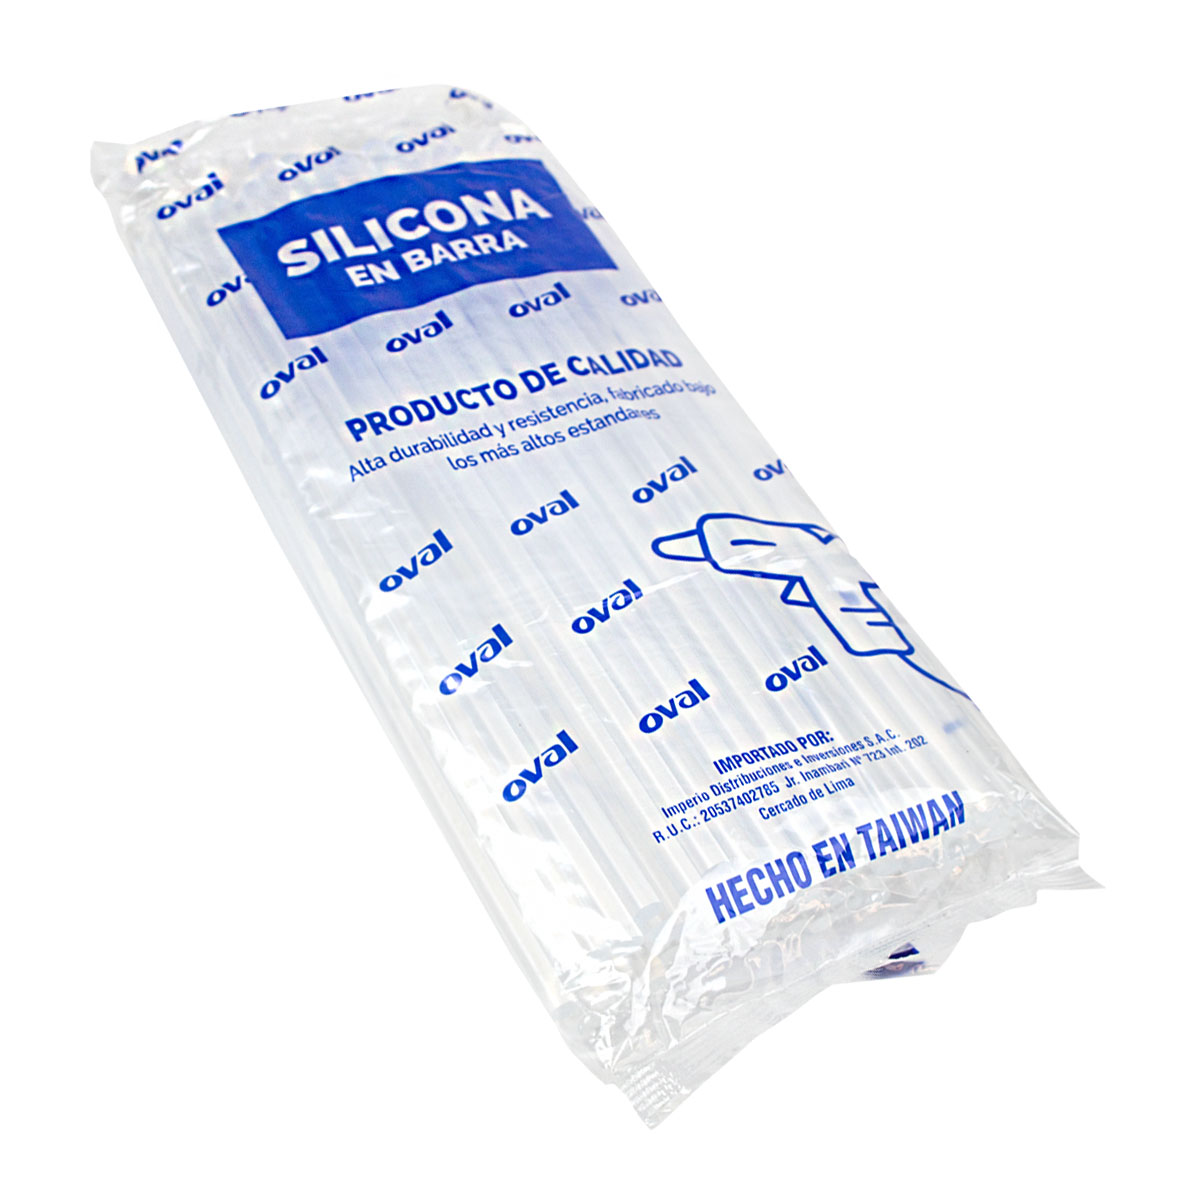 Silicona Líquida Bwhite SL280 30 ml. SABONIS